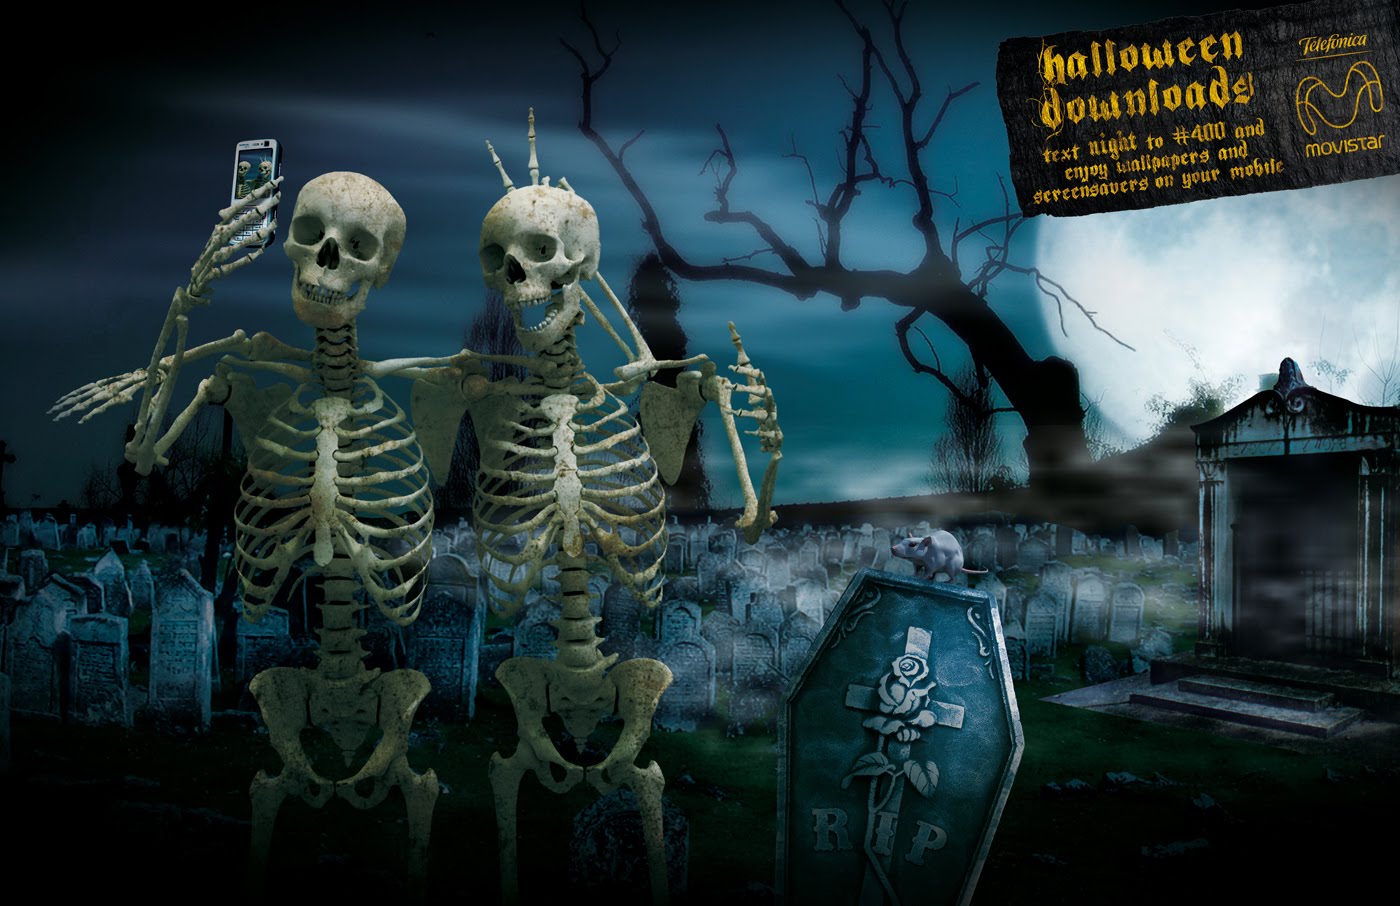 https://blogger.googleusercontent.com/img/b/R29vZ2xl/AVvXsEiCm1iZyKk7ho53DxZvXSBLTzU4NNSxd46iENDQ4Z52DHhzgUJPvAGJZ9fLaSIDqEJVhCmmy30uG4S4hh5GRWT40iZ9Yo1e9GV6ps9adyWmsJyBrABqKScF6htAv_q9ps7w1gEsQ-3cxyc/s1600/Halloween-Dancing-Skeleton-Festive-Invitation.jpg